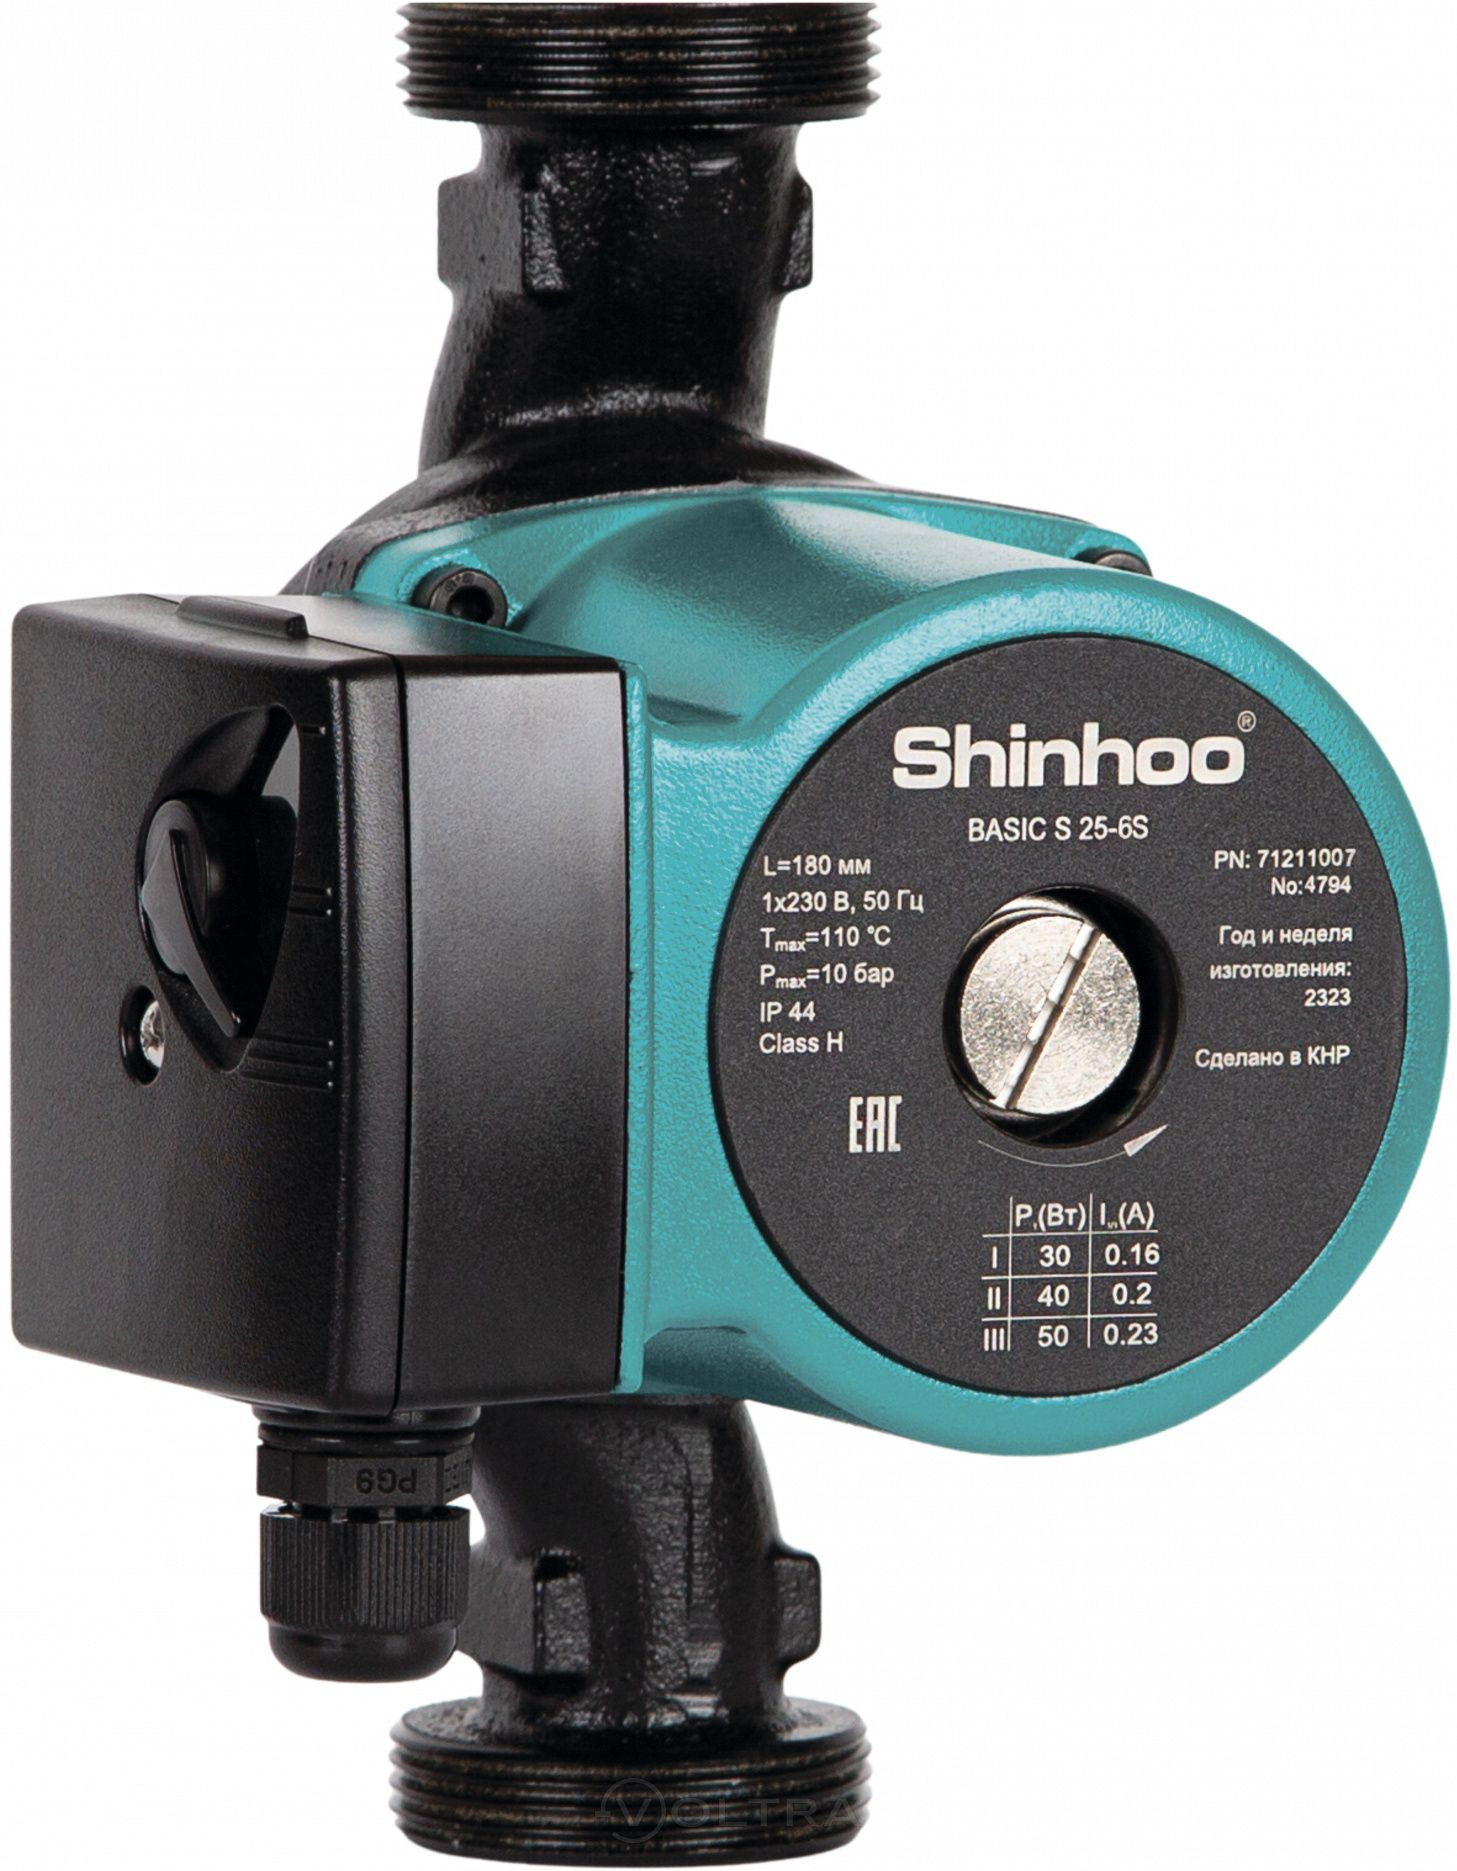 SHINHOO BASIC S 32-8S 180